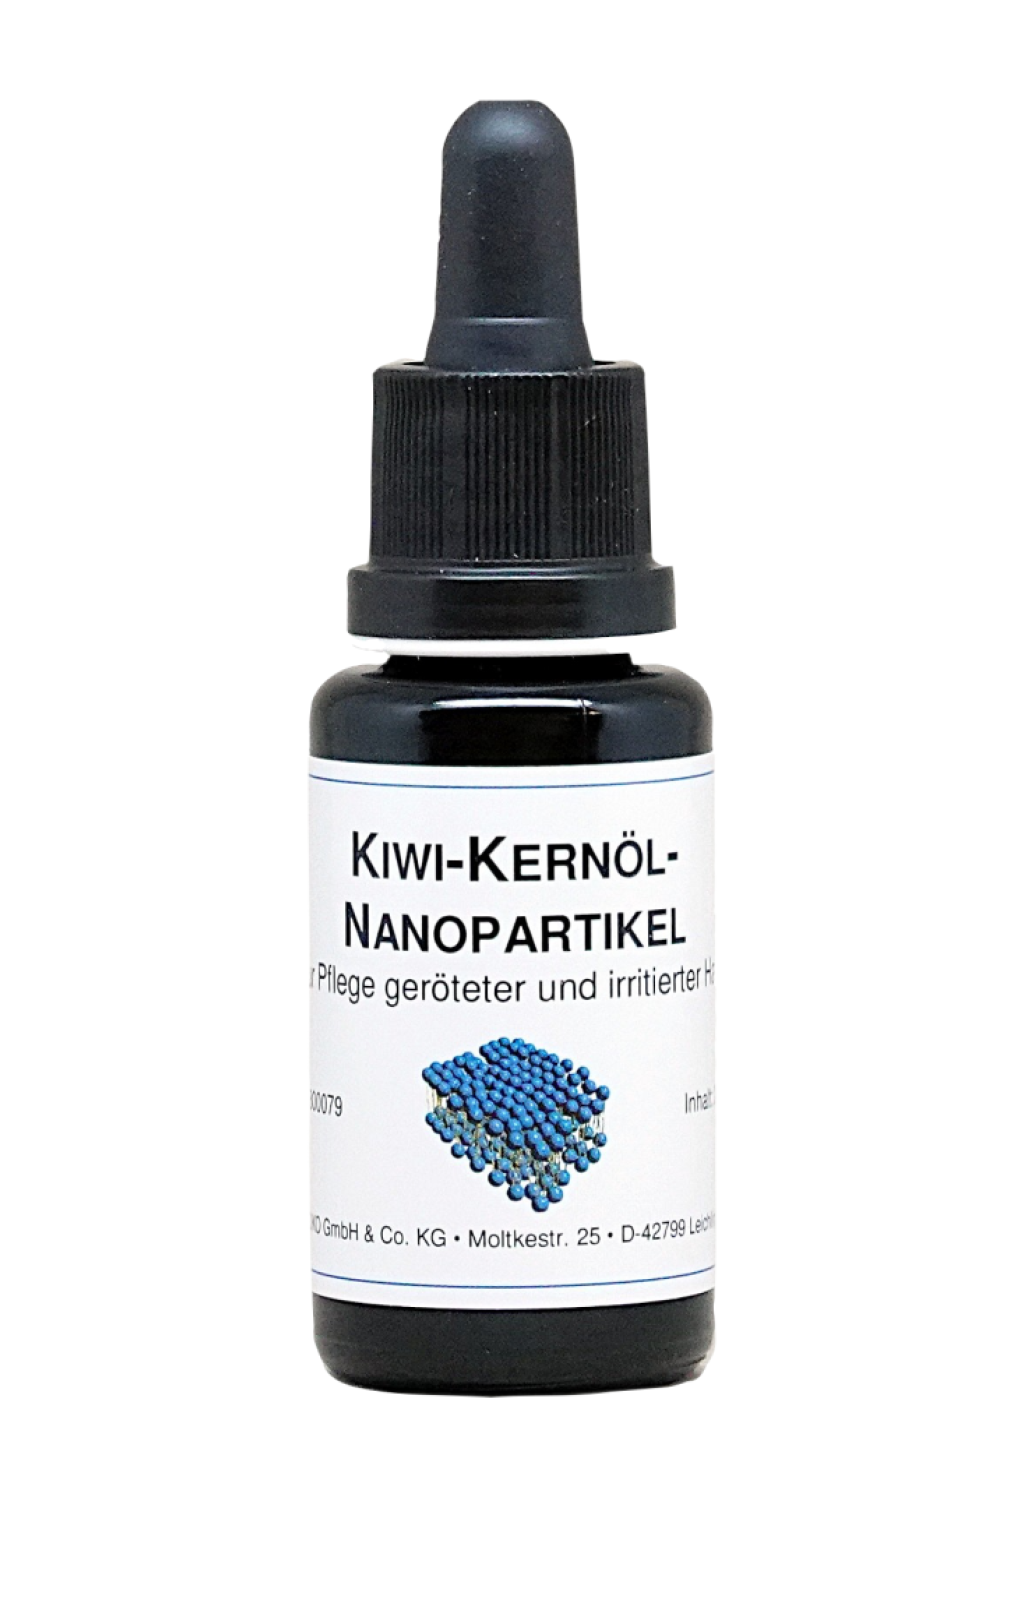 Kiwi-Kernöl-Nanopartikel 